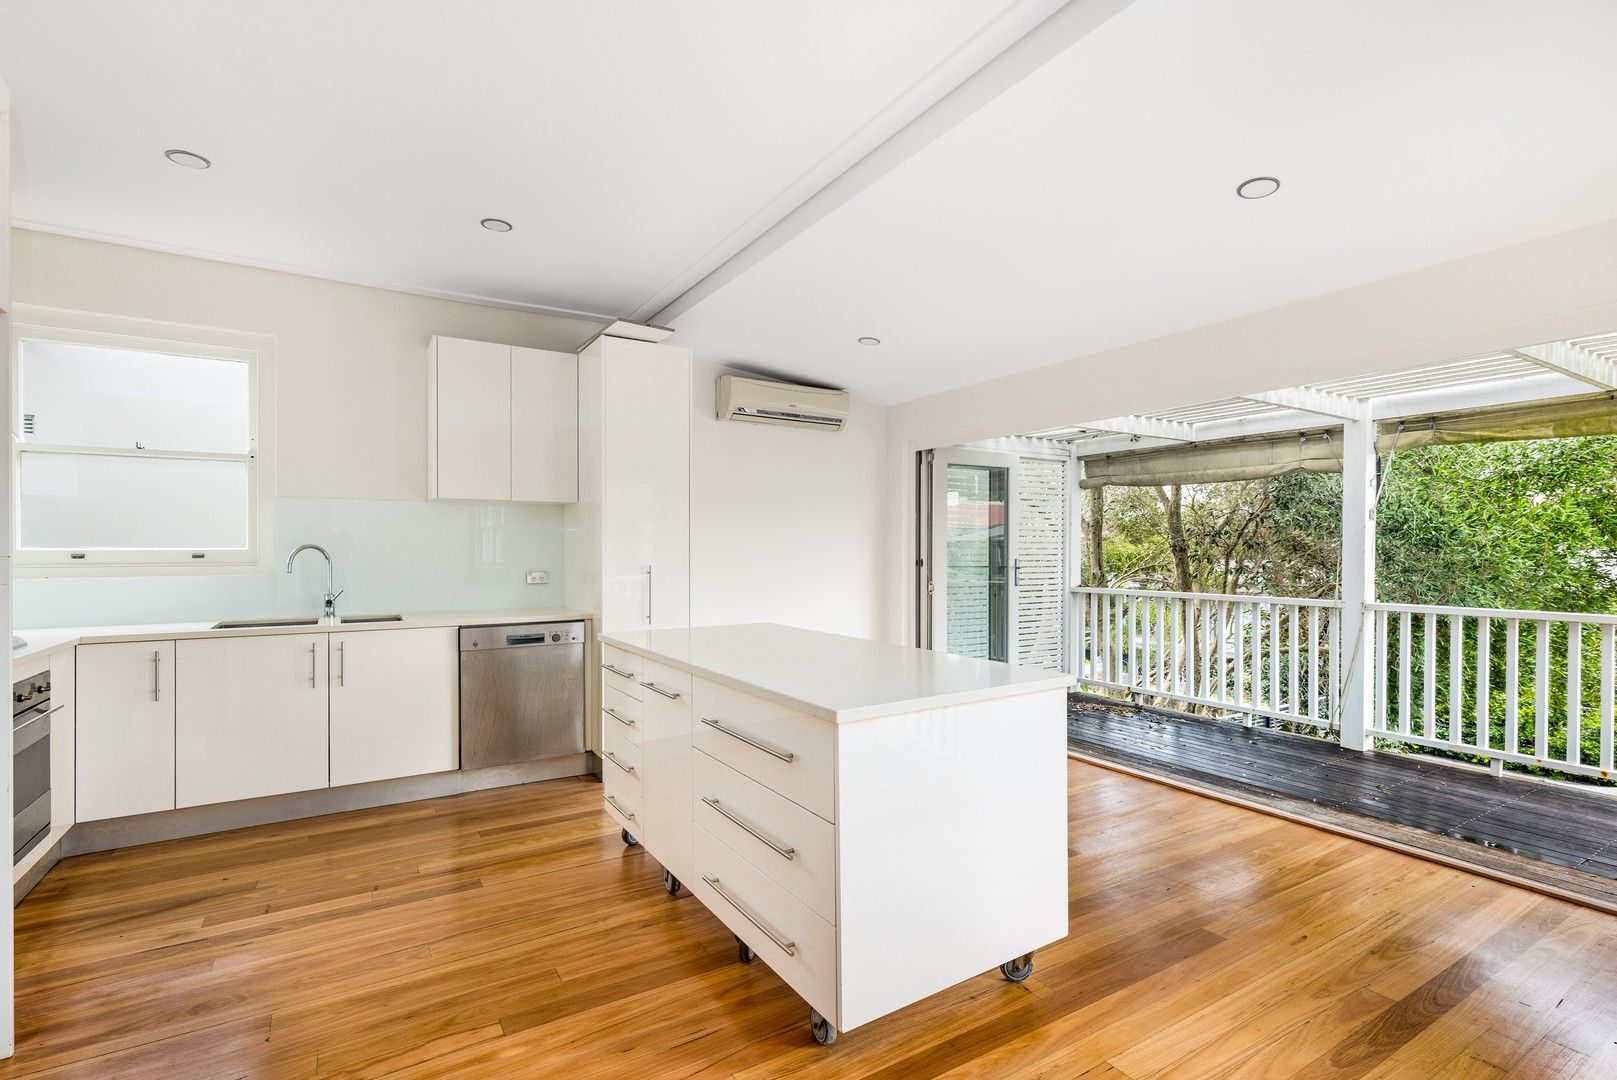 2 bedrooms House in 93 Lamb Street LILYFIELD NSW, 2040